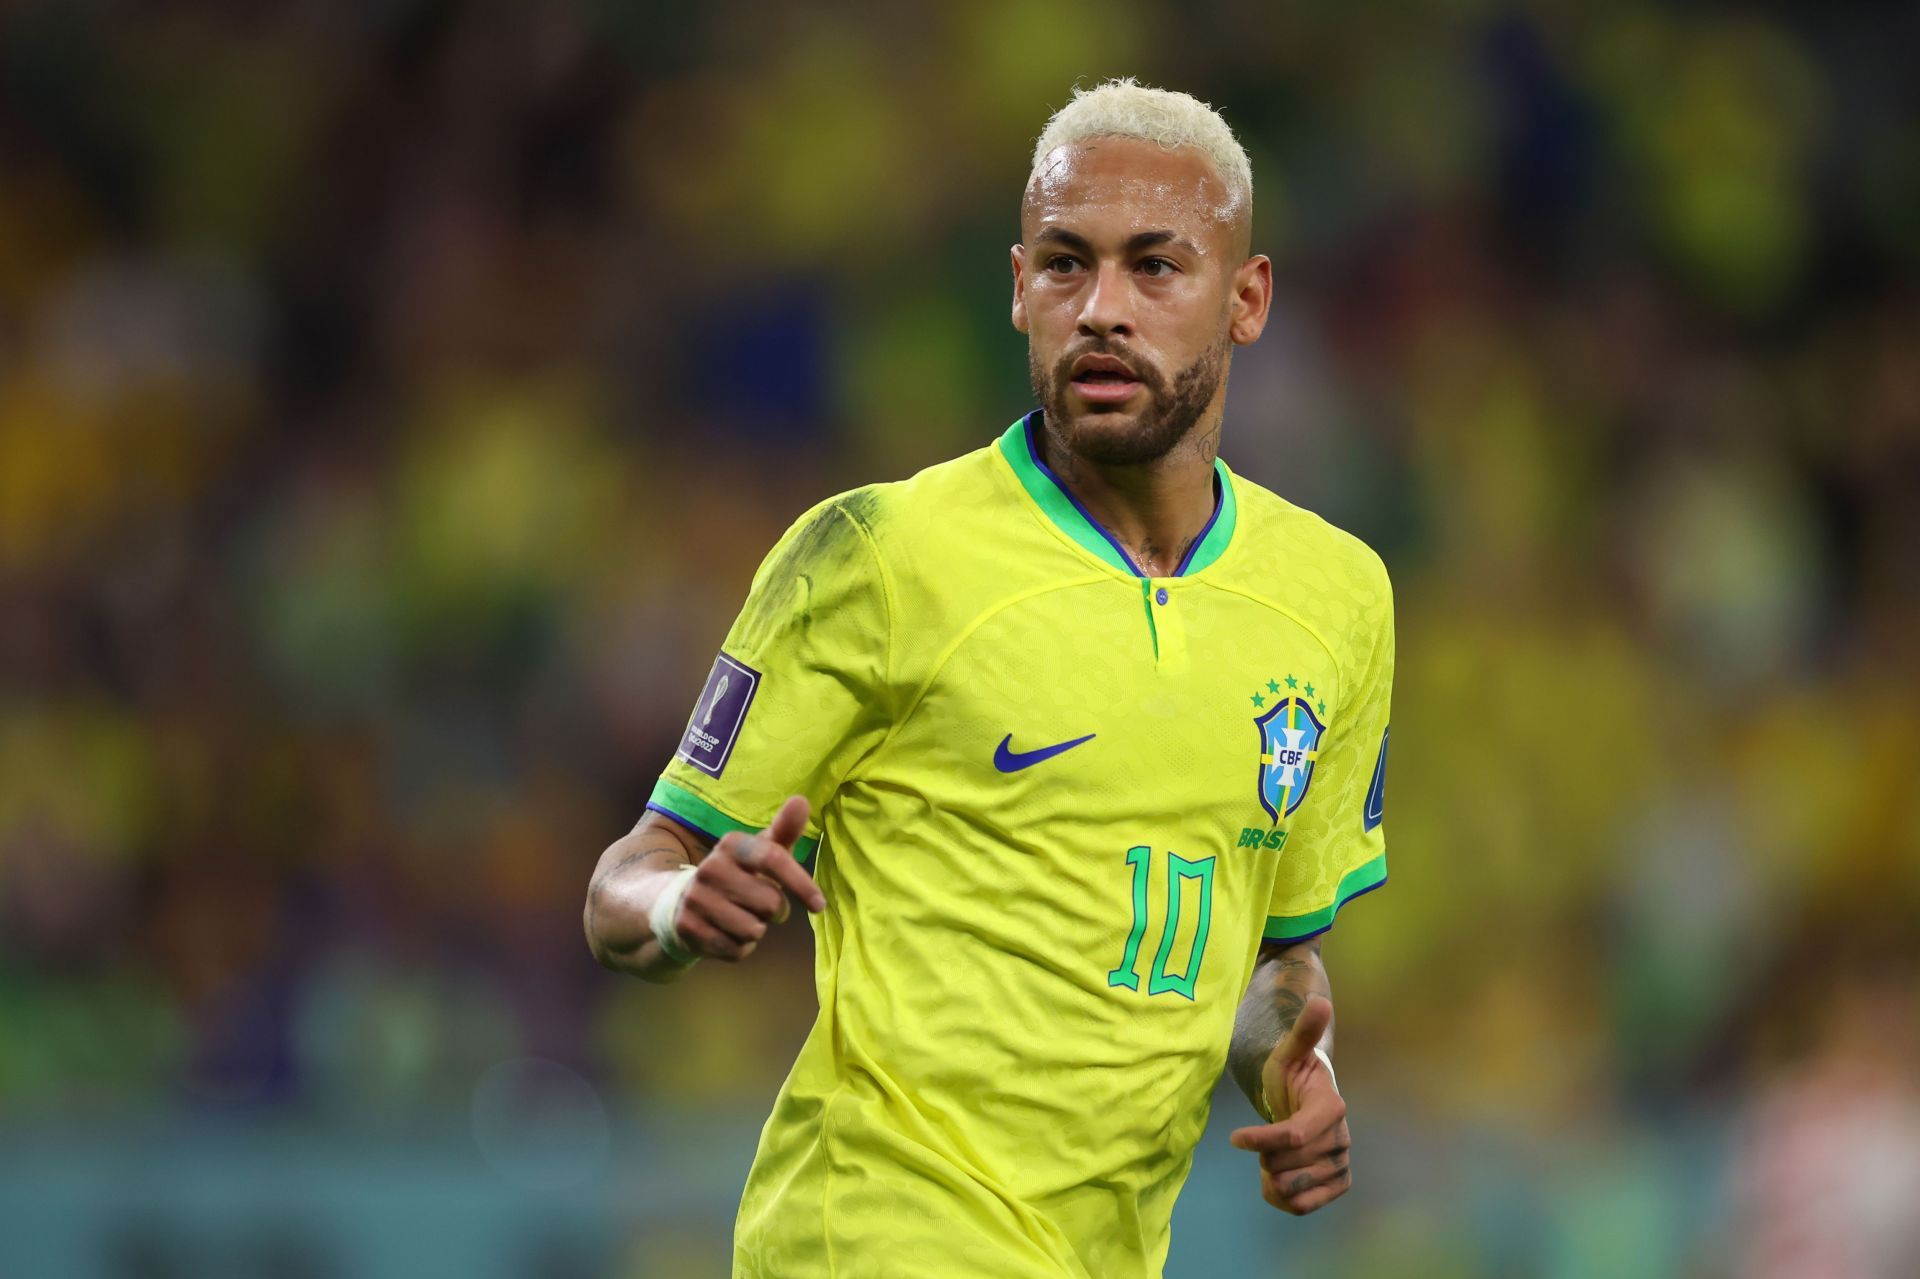 Neymar has been on fire this season.